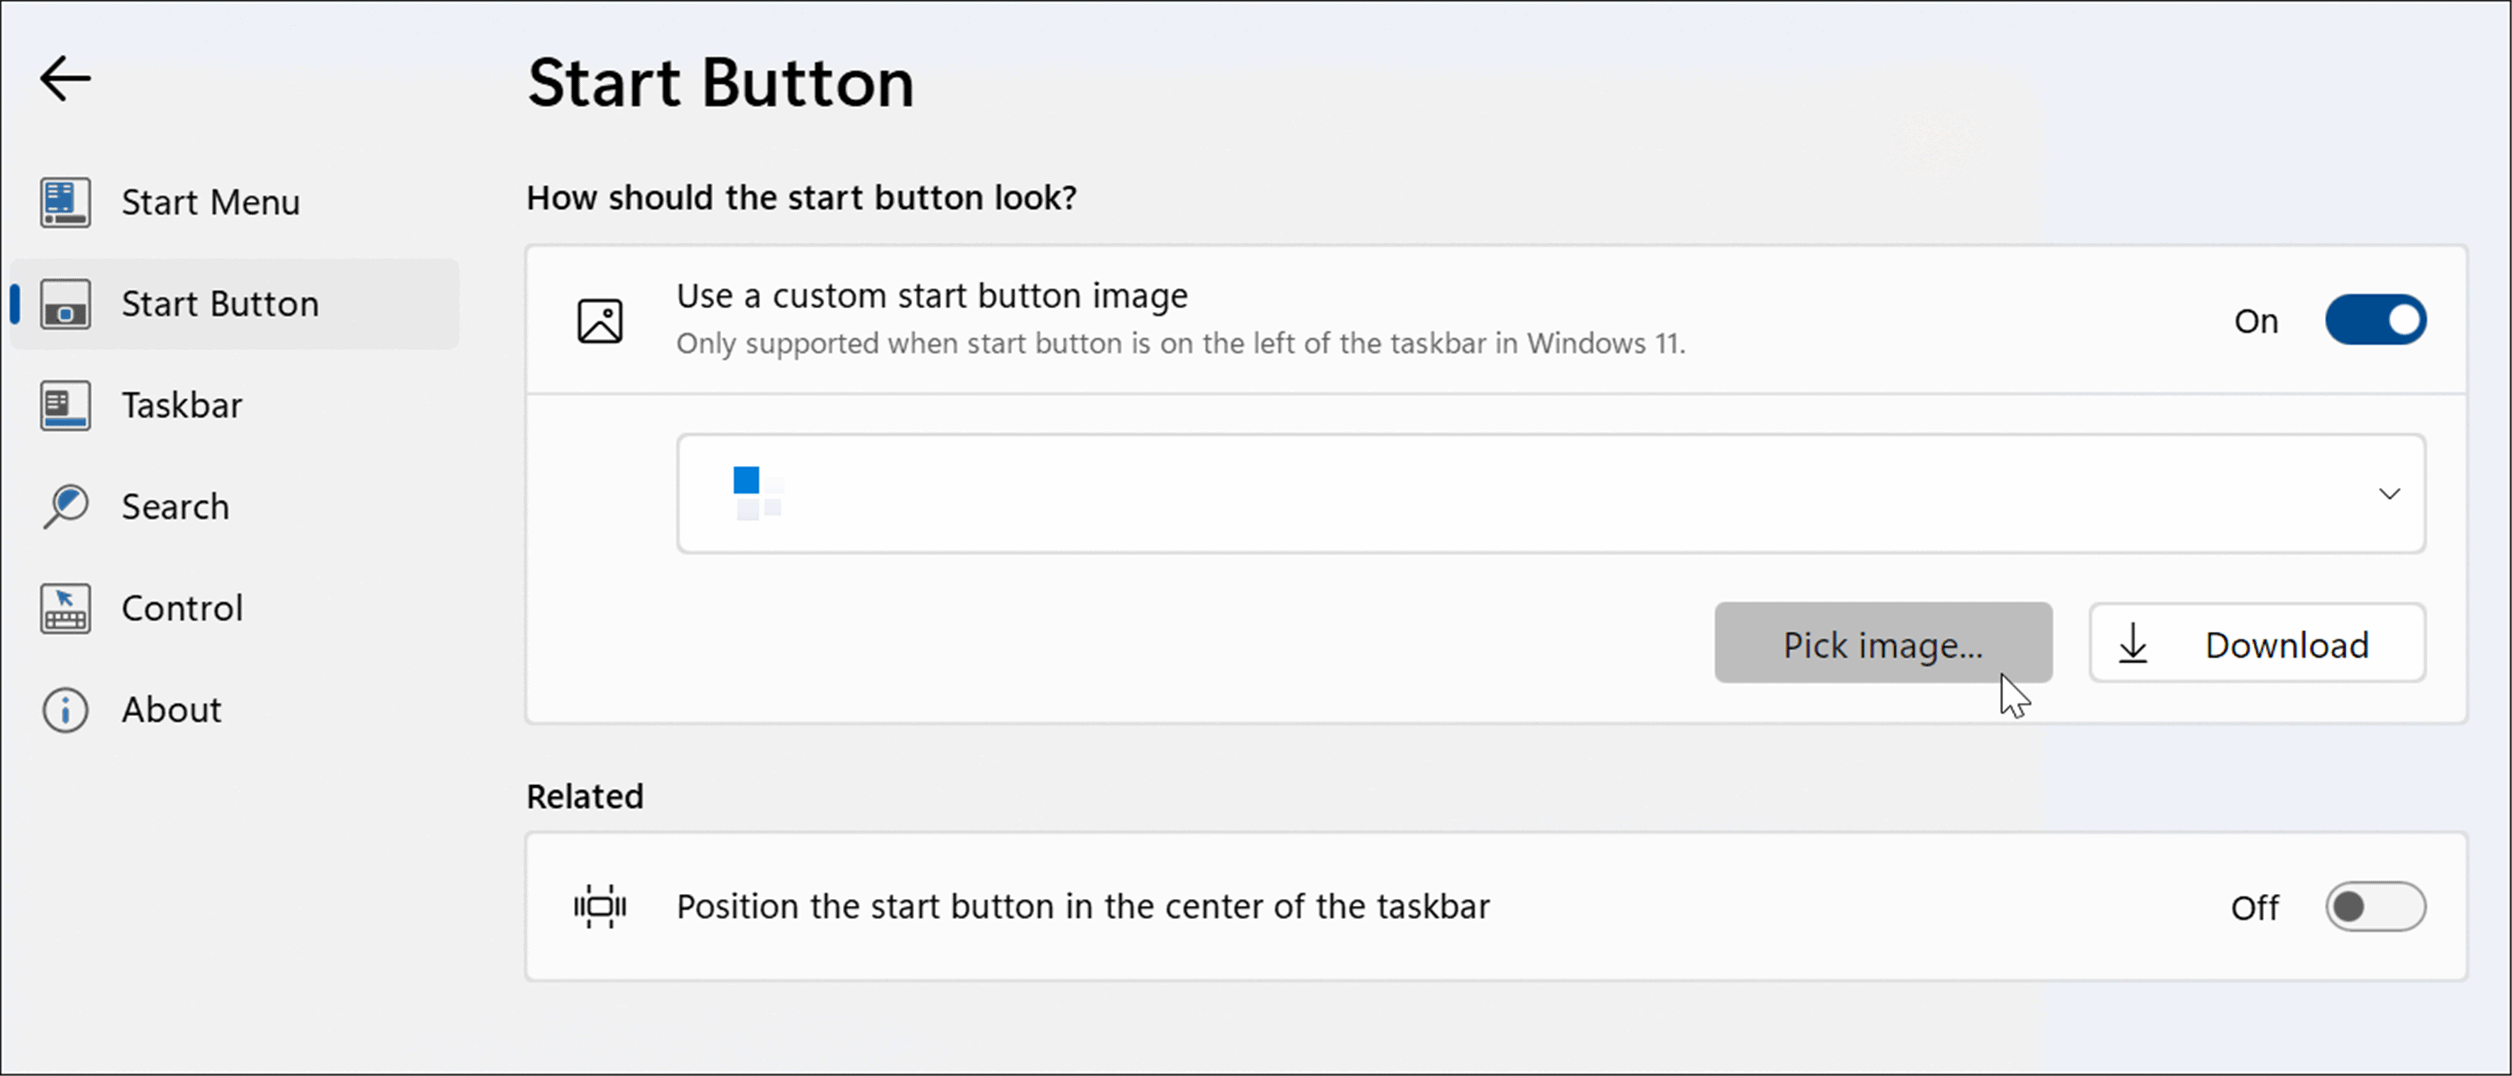 imporve the windows 11 start menu and taskbar with Start11